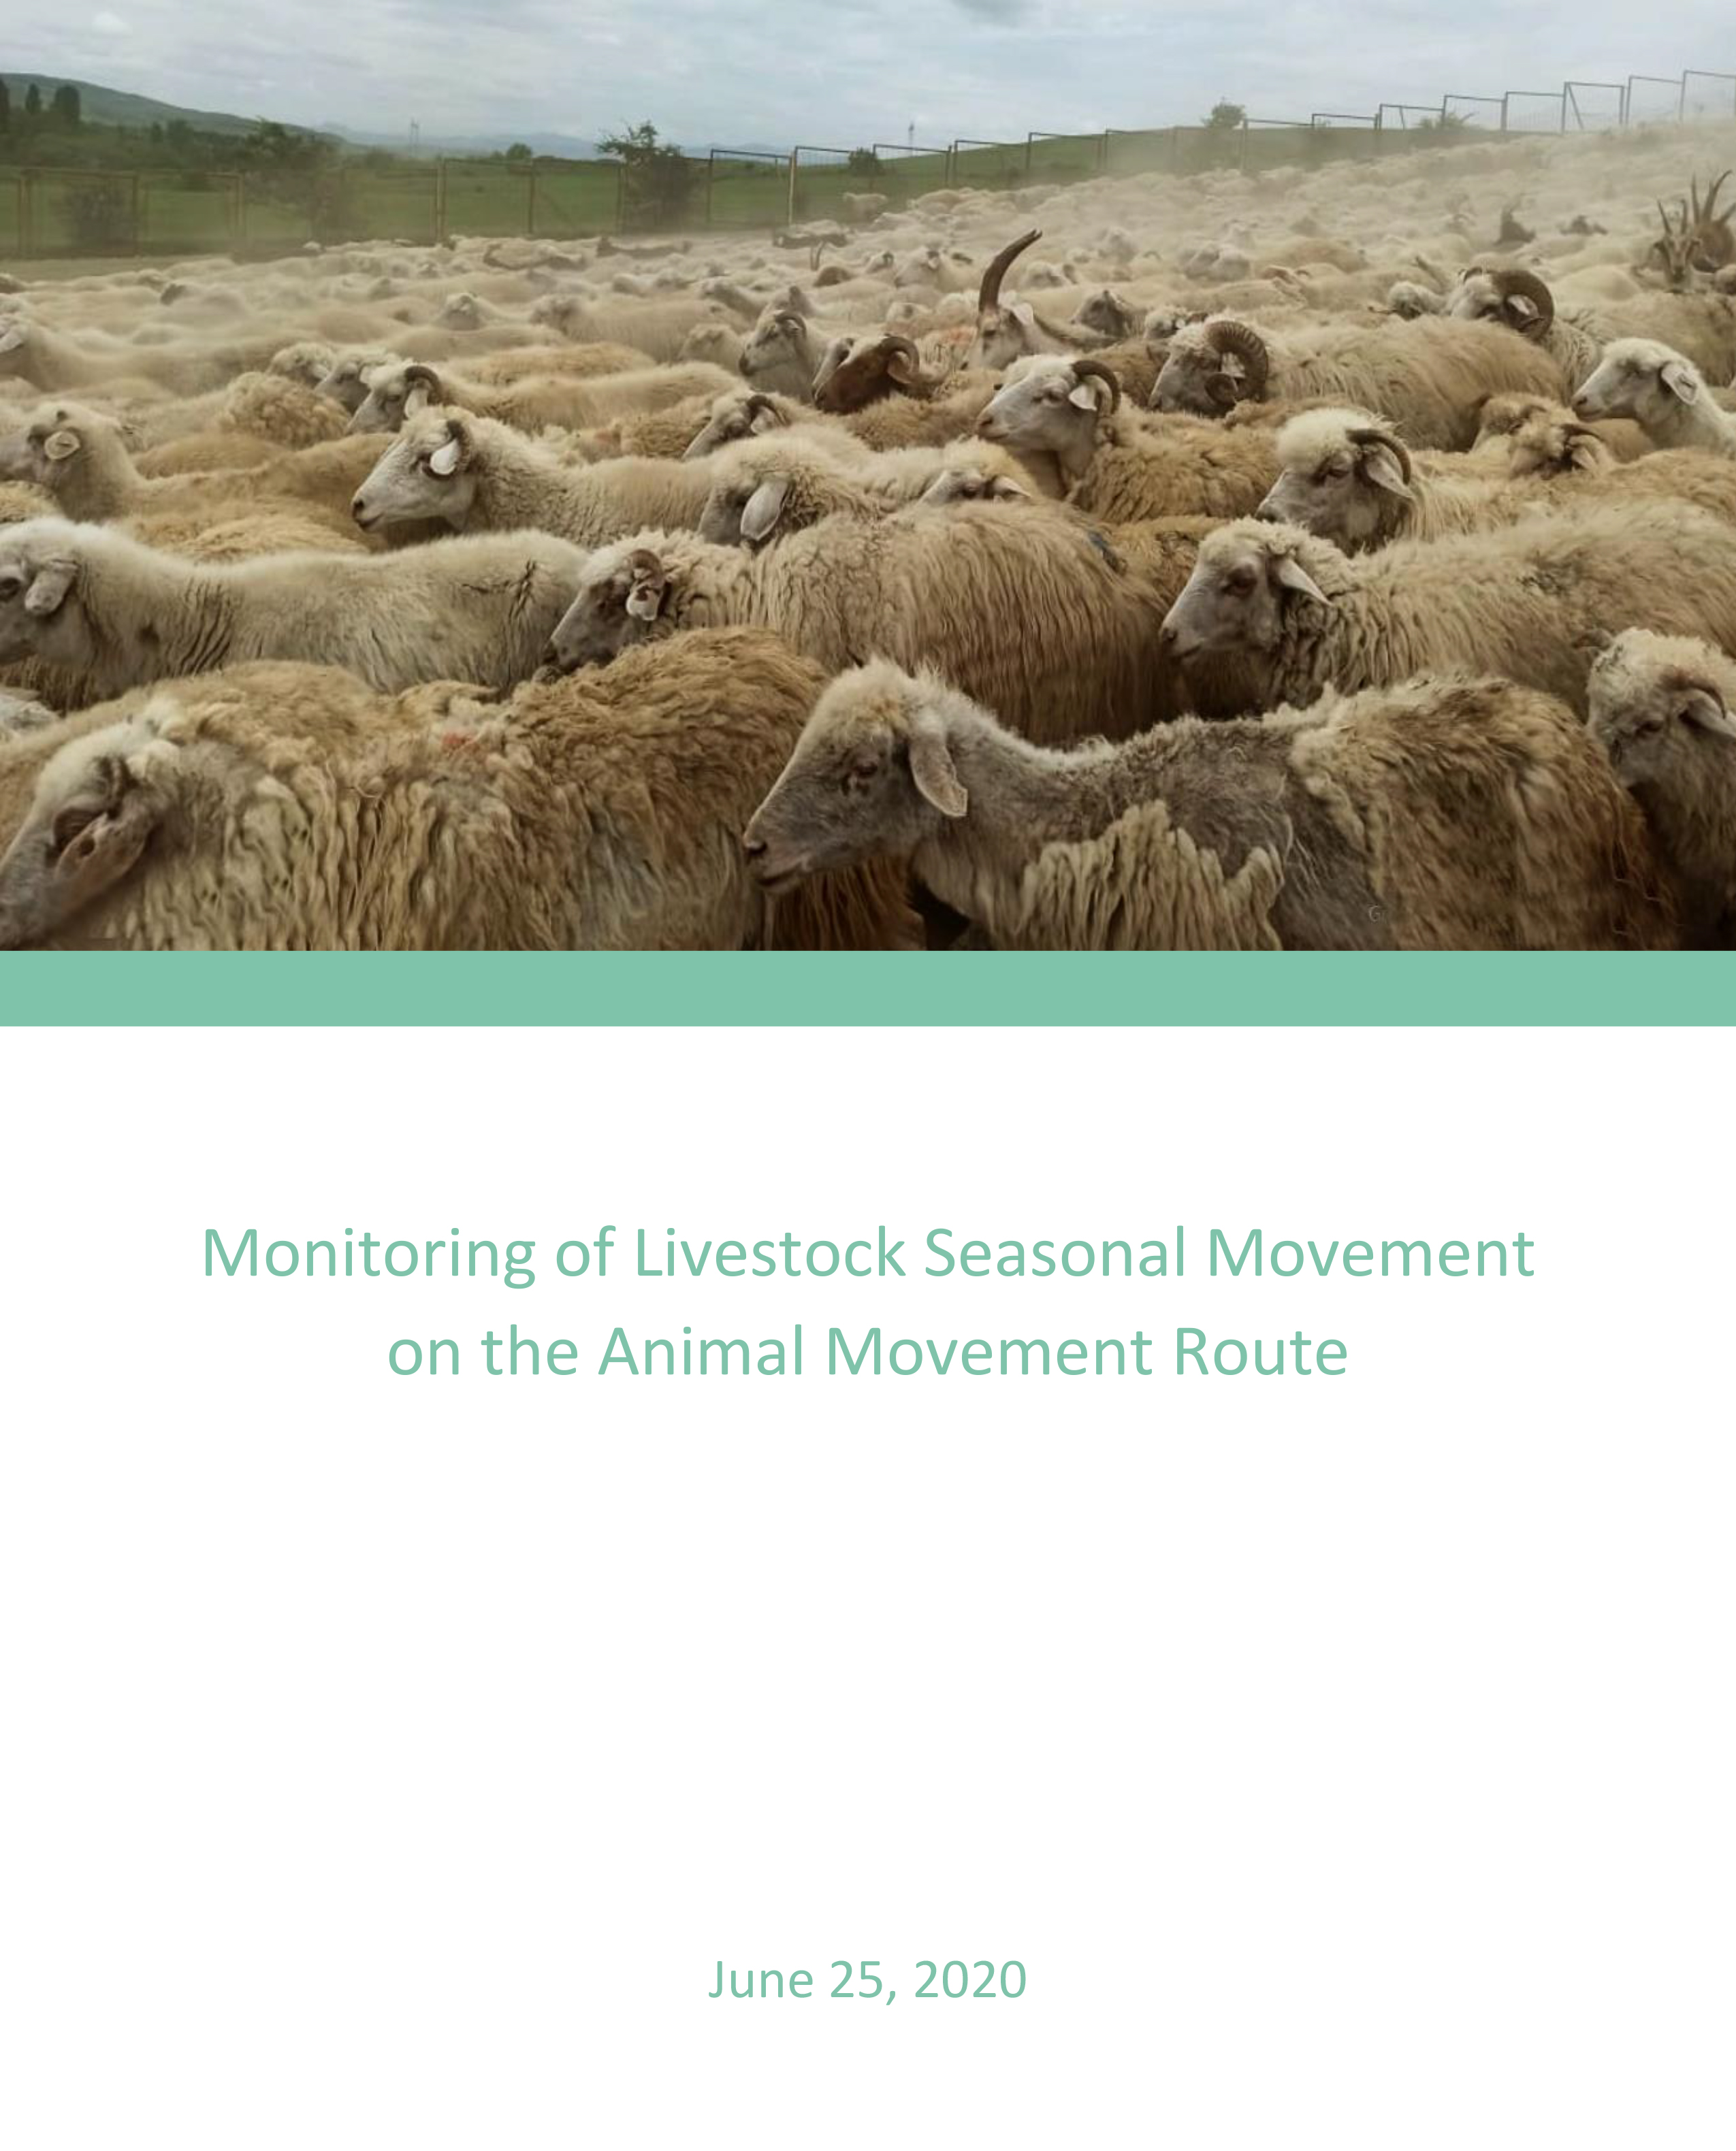 Monitoring of Livestock Seasonal Movement on the AMR - June, 2020